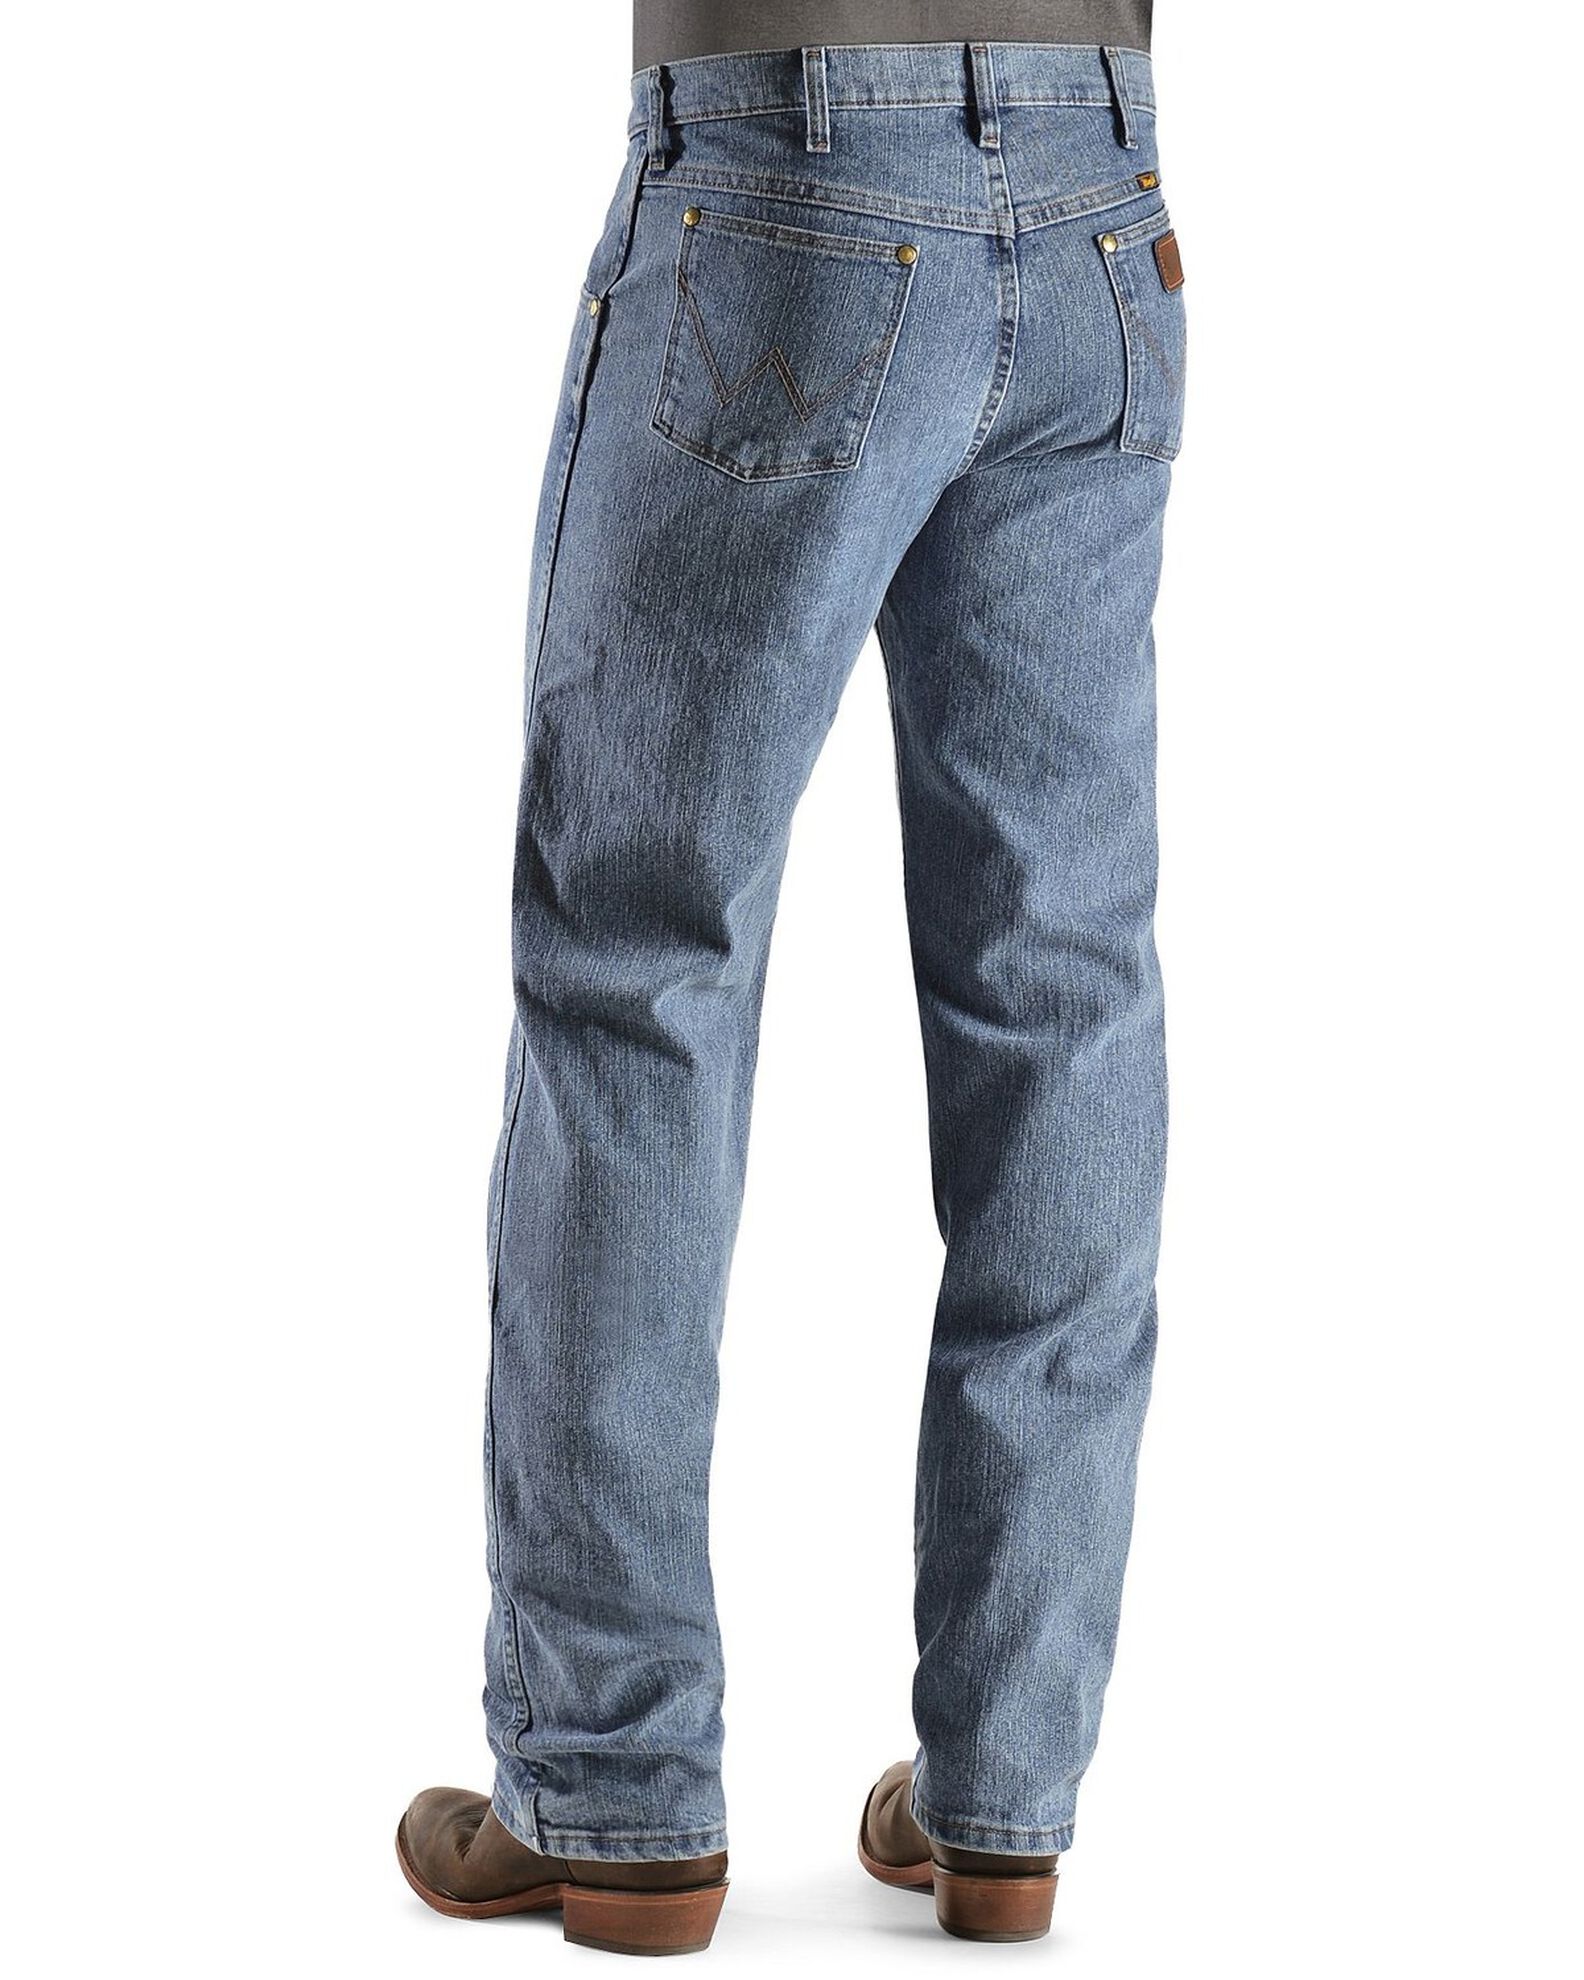 Wrangler Men's Premium Performance Advanced Comfort Stone Beach Jeans - Big & Tall